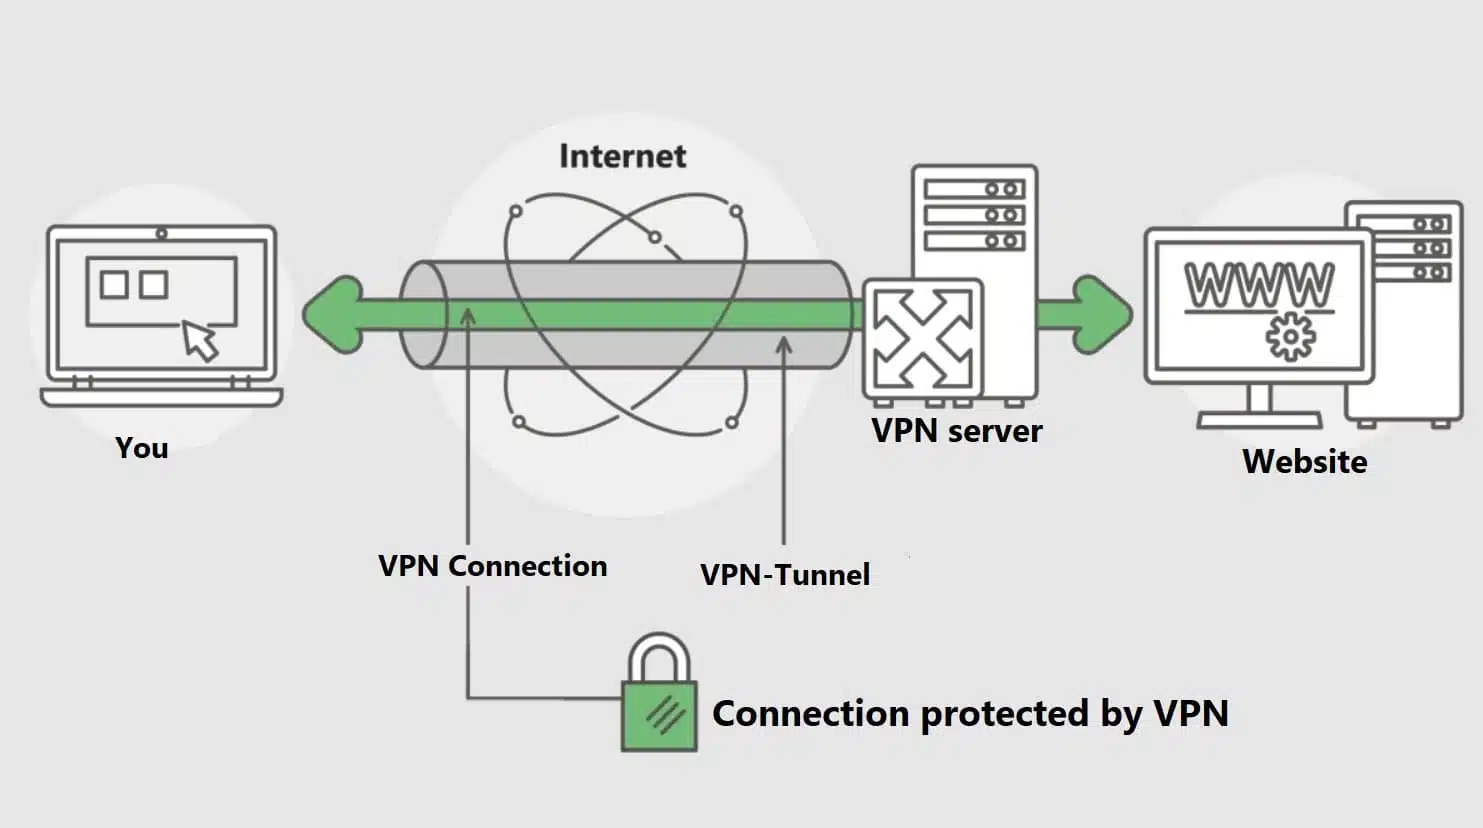 Internet connection via VPN